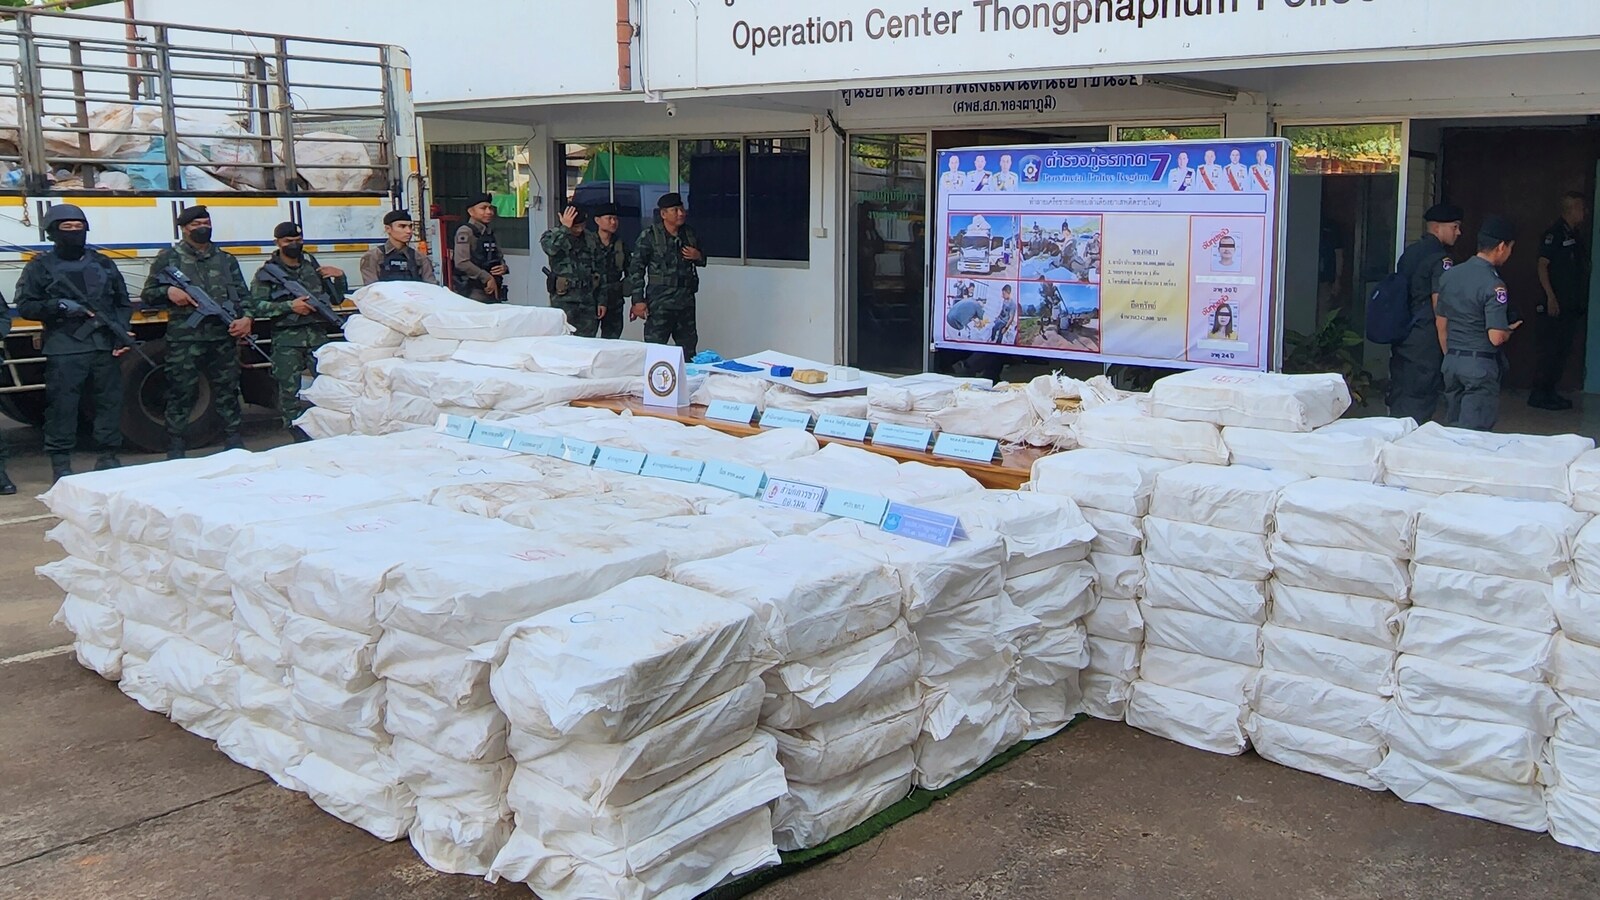 50 million methamphetamine tablets seized by Thai police near Myanmar border